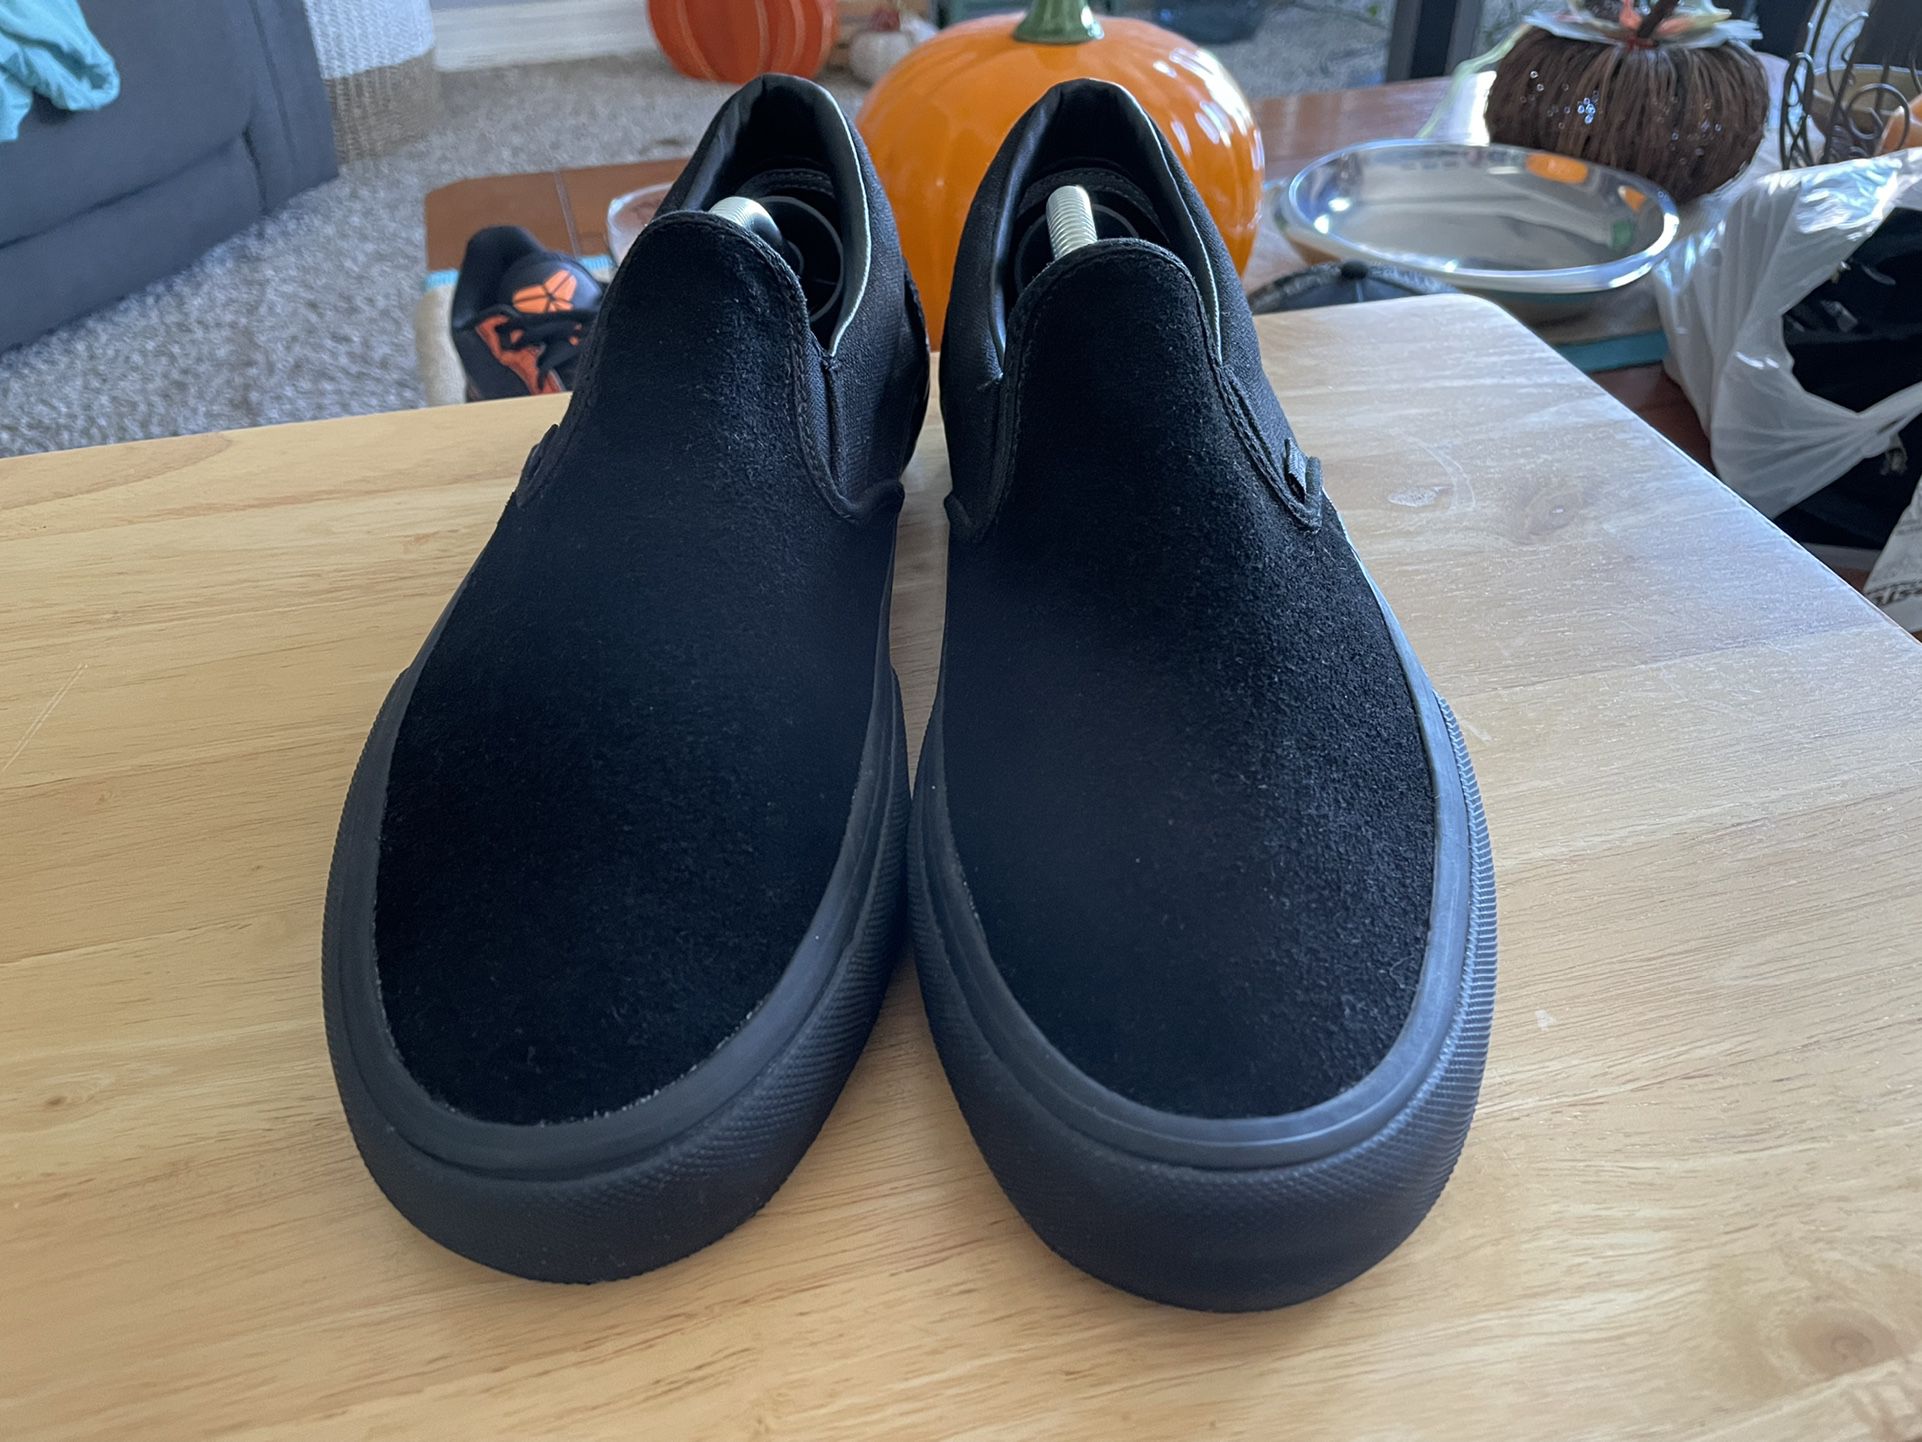 Vans Slip-On Pro All Black Size 11